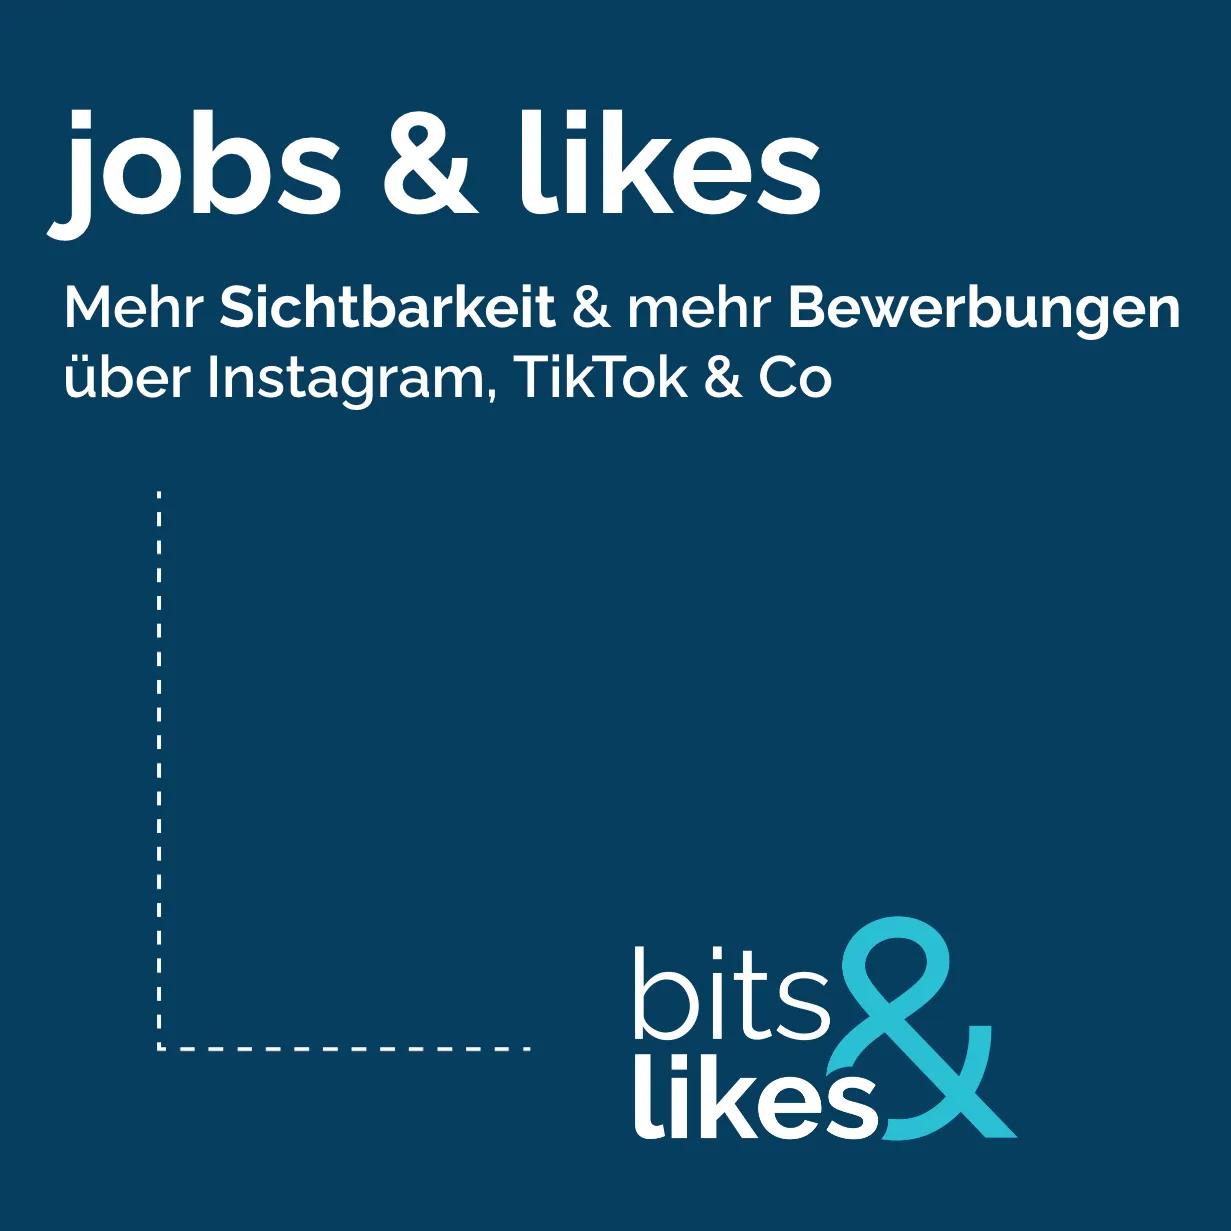 jobs & likes - Mit Social Recruiting mehr Bewerbungen generieren